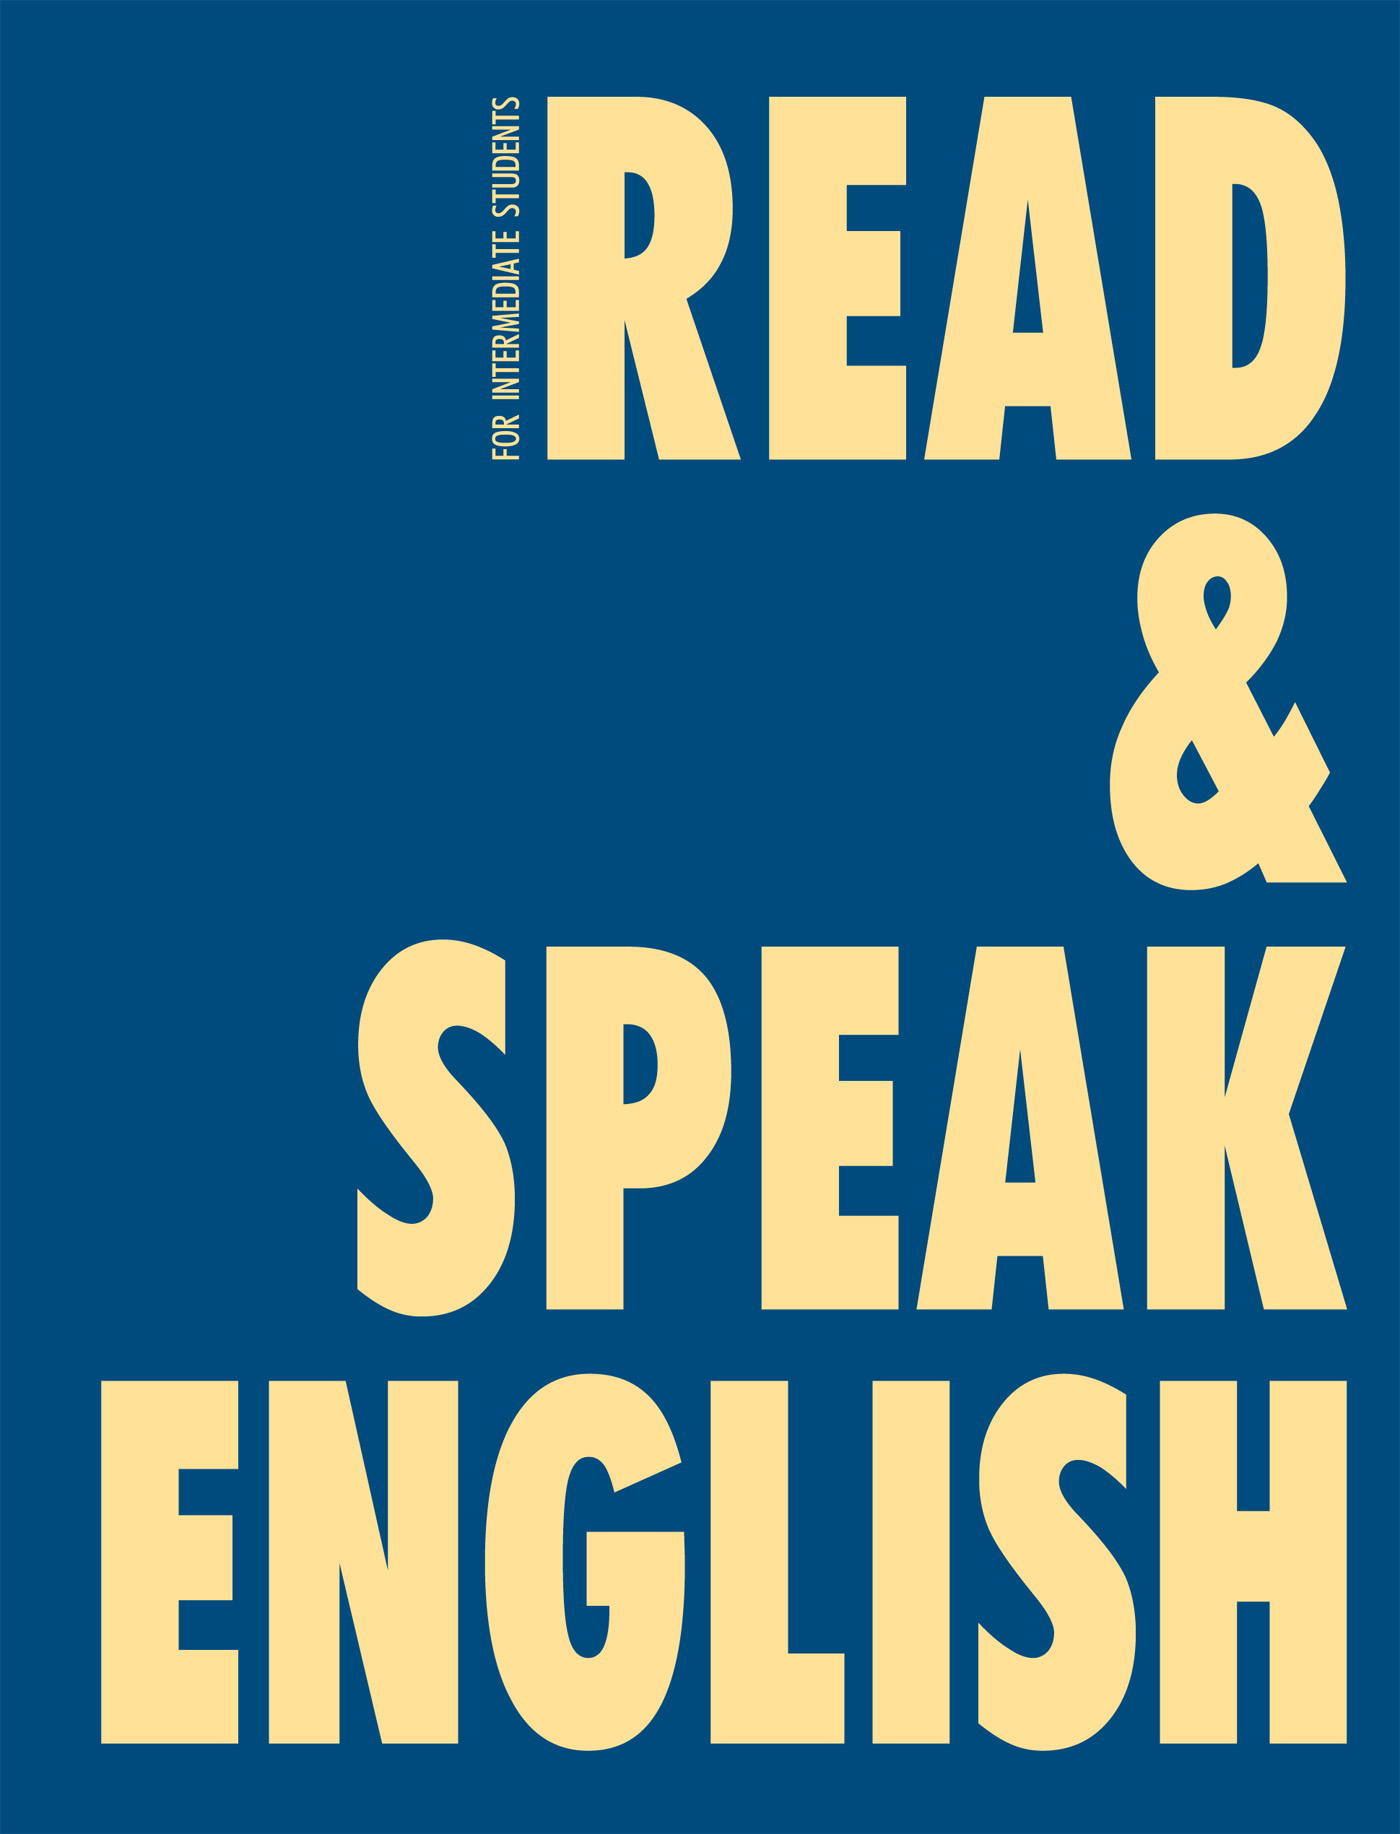 Read&Speak English